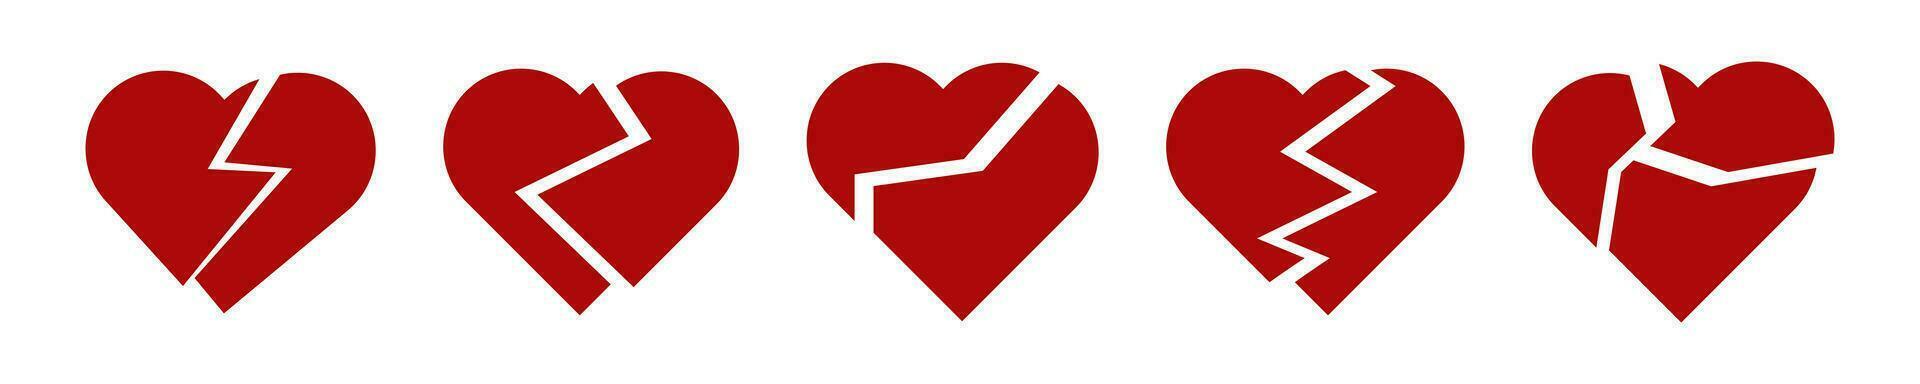 Broken heart icon. Heart red shape vector